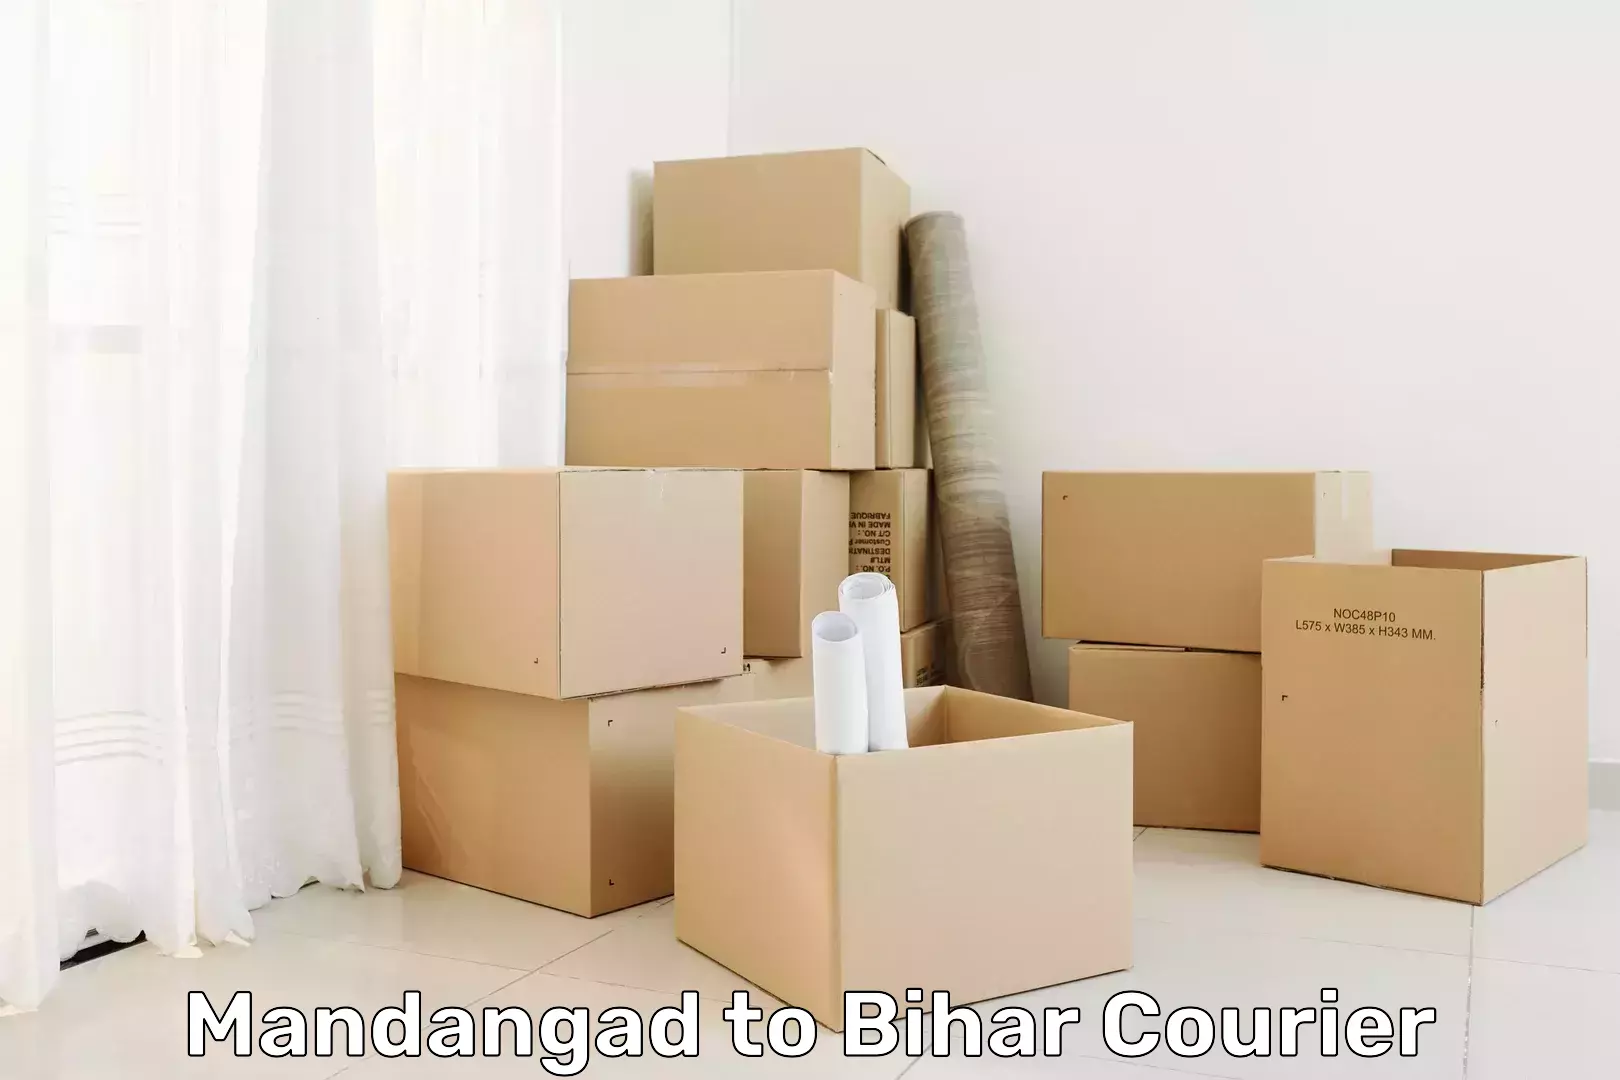 State-of-the-art courier technology Mandangad to Goh Aurangabad